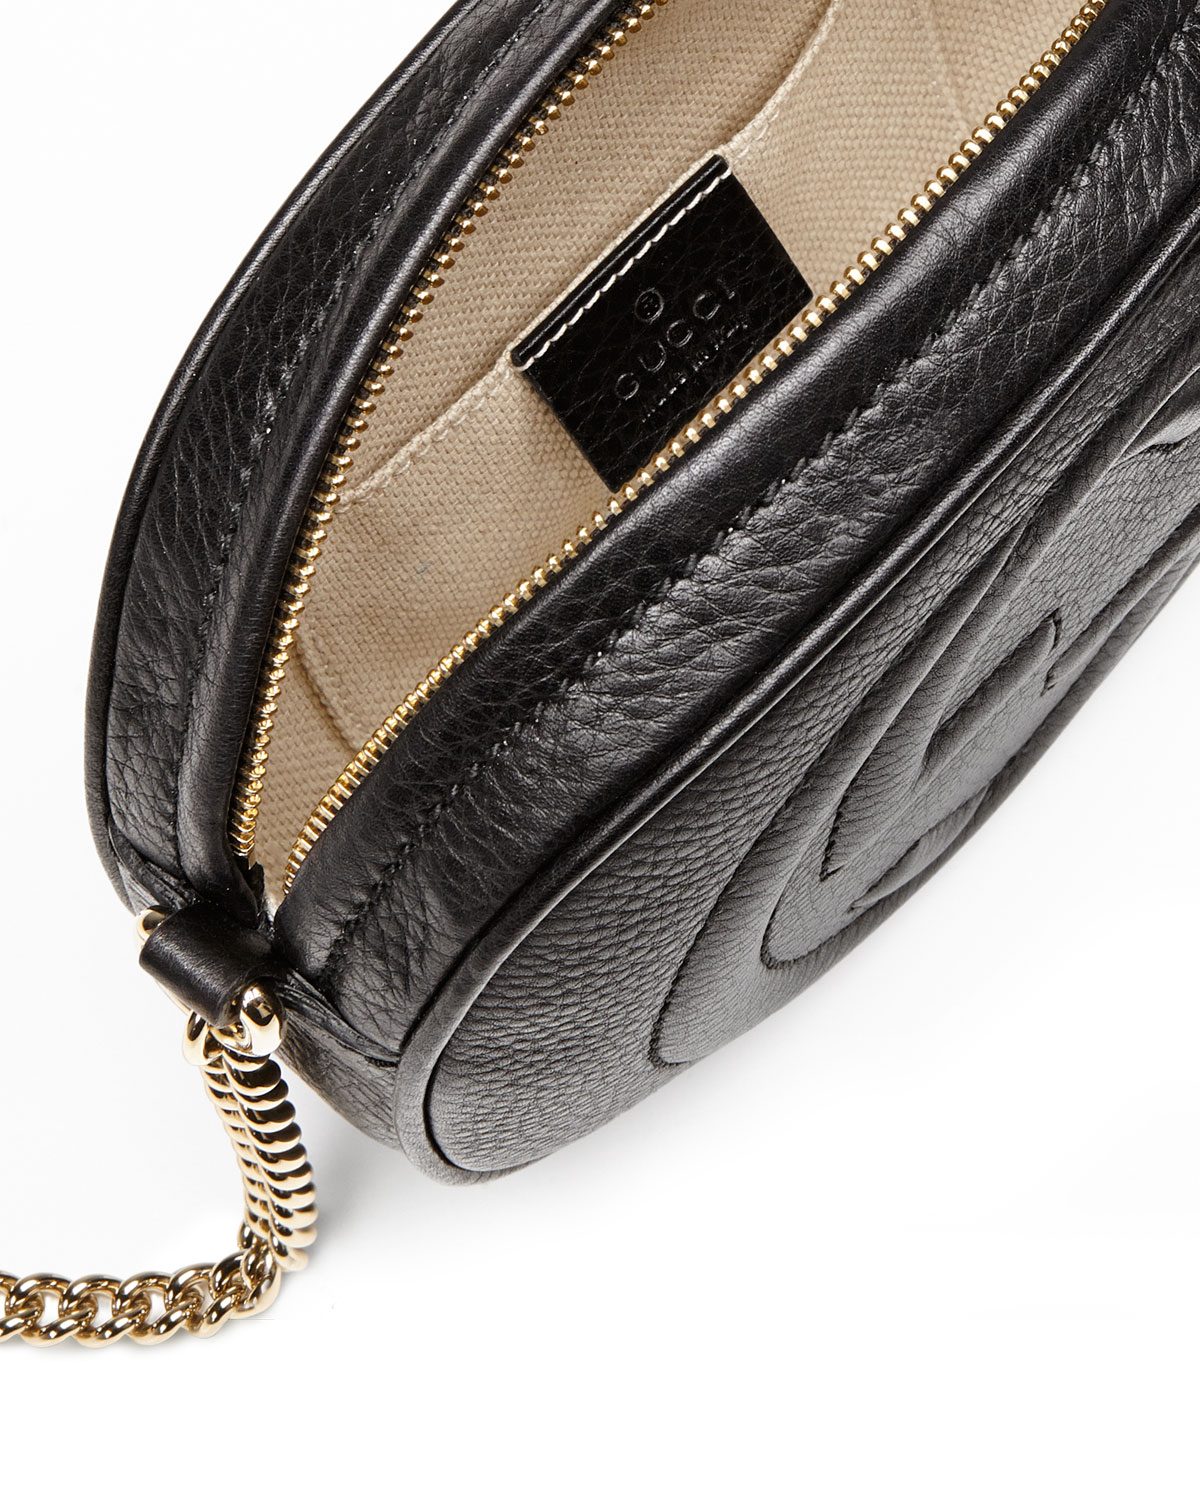 Lyst - Gucci Soho Leather Mini Chain Bag in Black